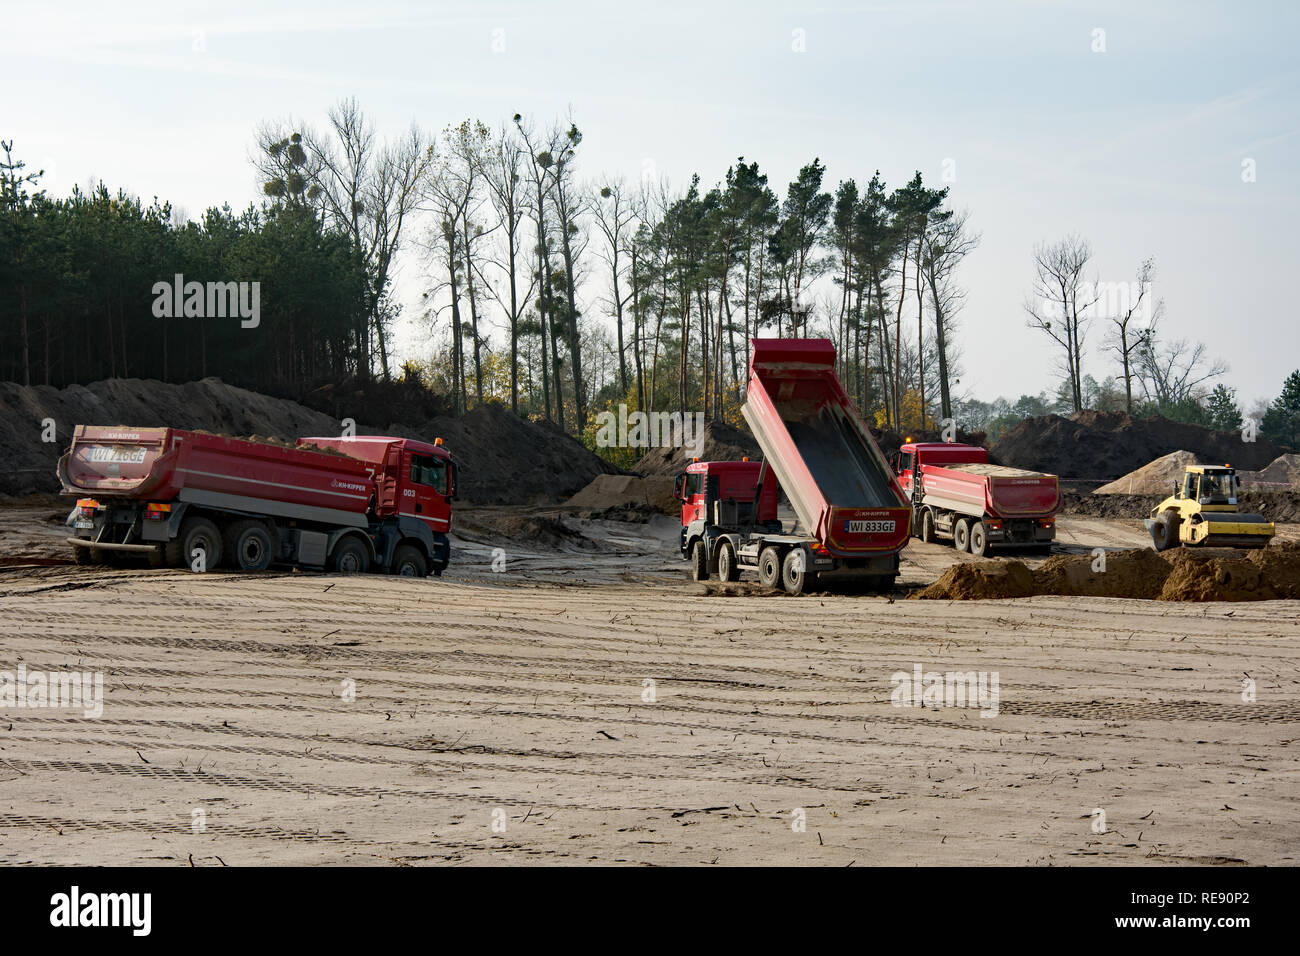 KRUSZYN KRAJENSKI, SZKOCJA, KUJAWSKO-POMORSKIE/POLAND - NOVEMBER 4, 2017 - S5 construction site with three man kipper dumpers bringing sand on the roa Stock Photo